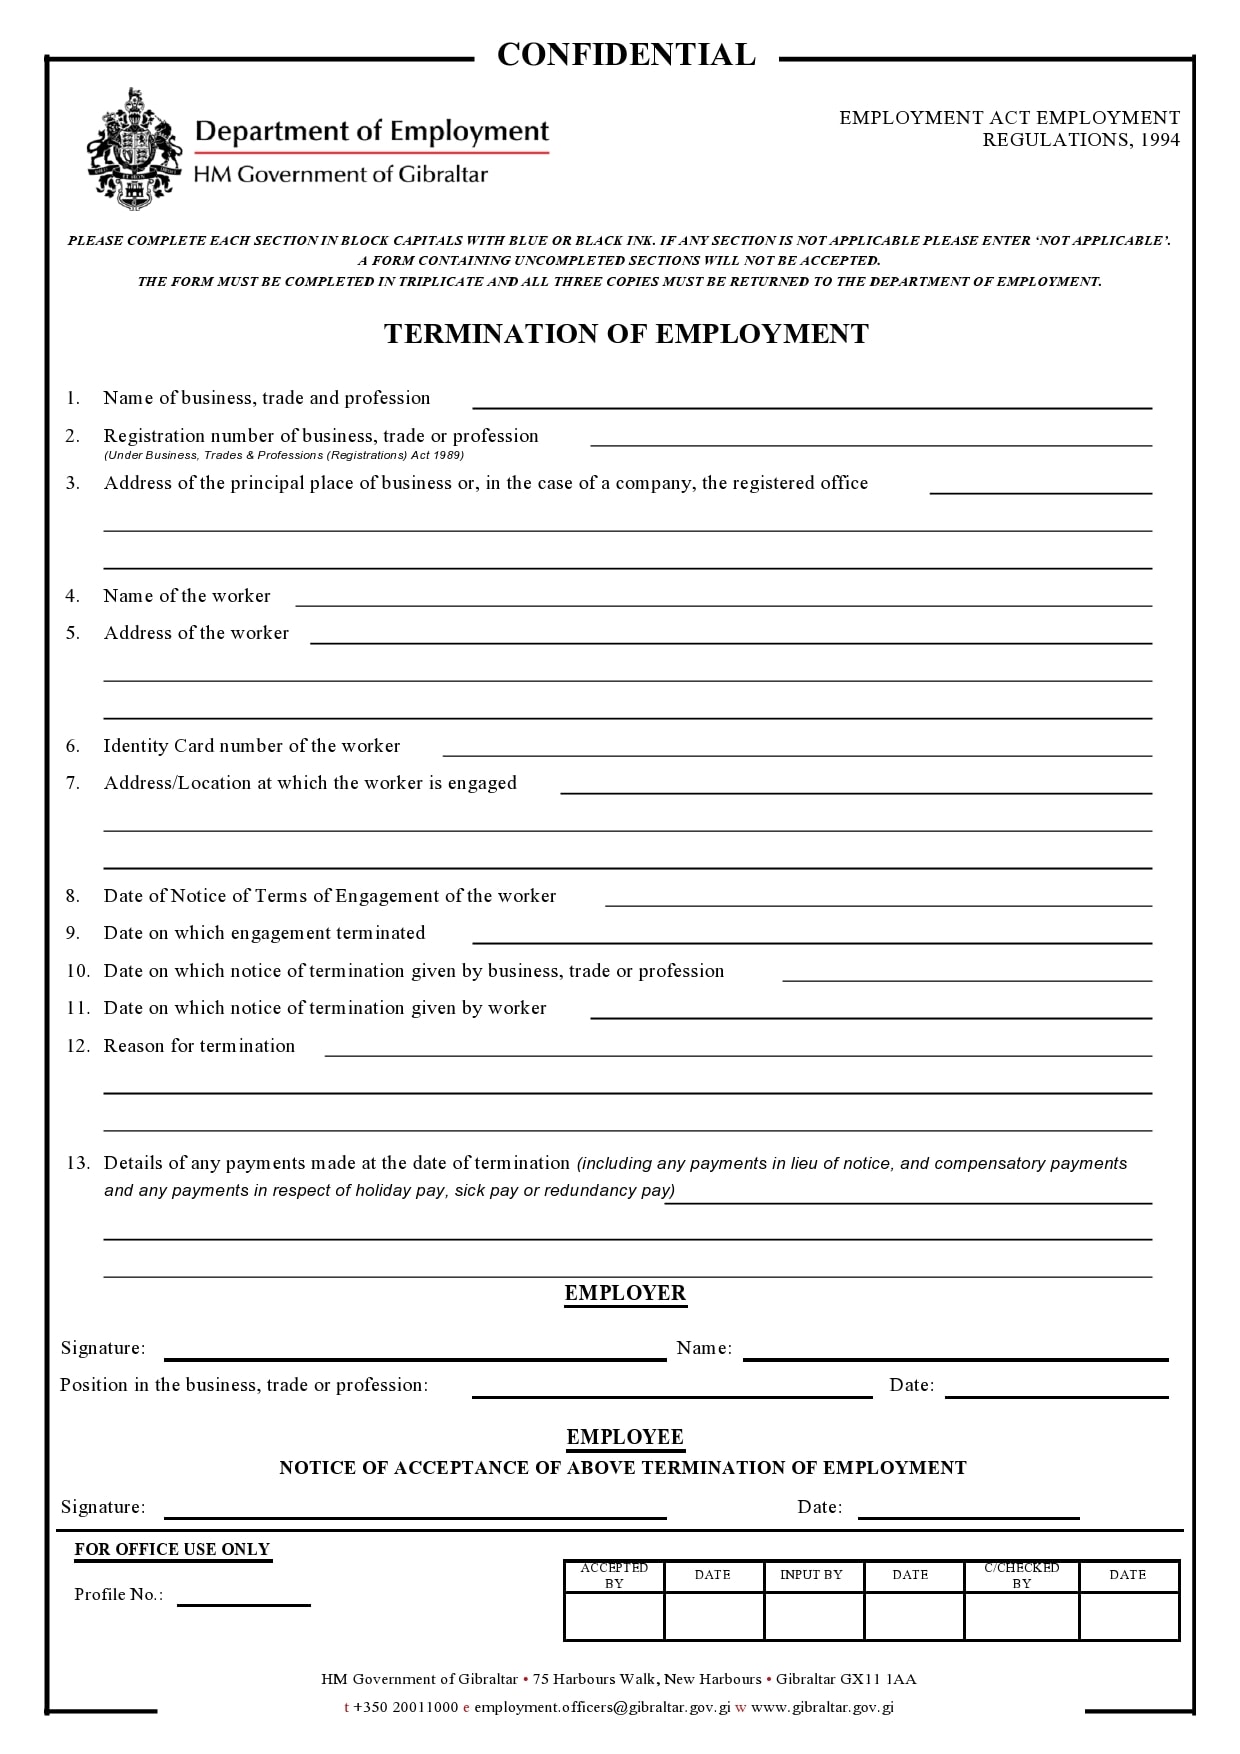 Employee Termination Form Template Database - Gambaran